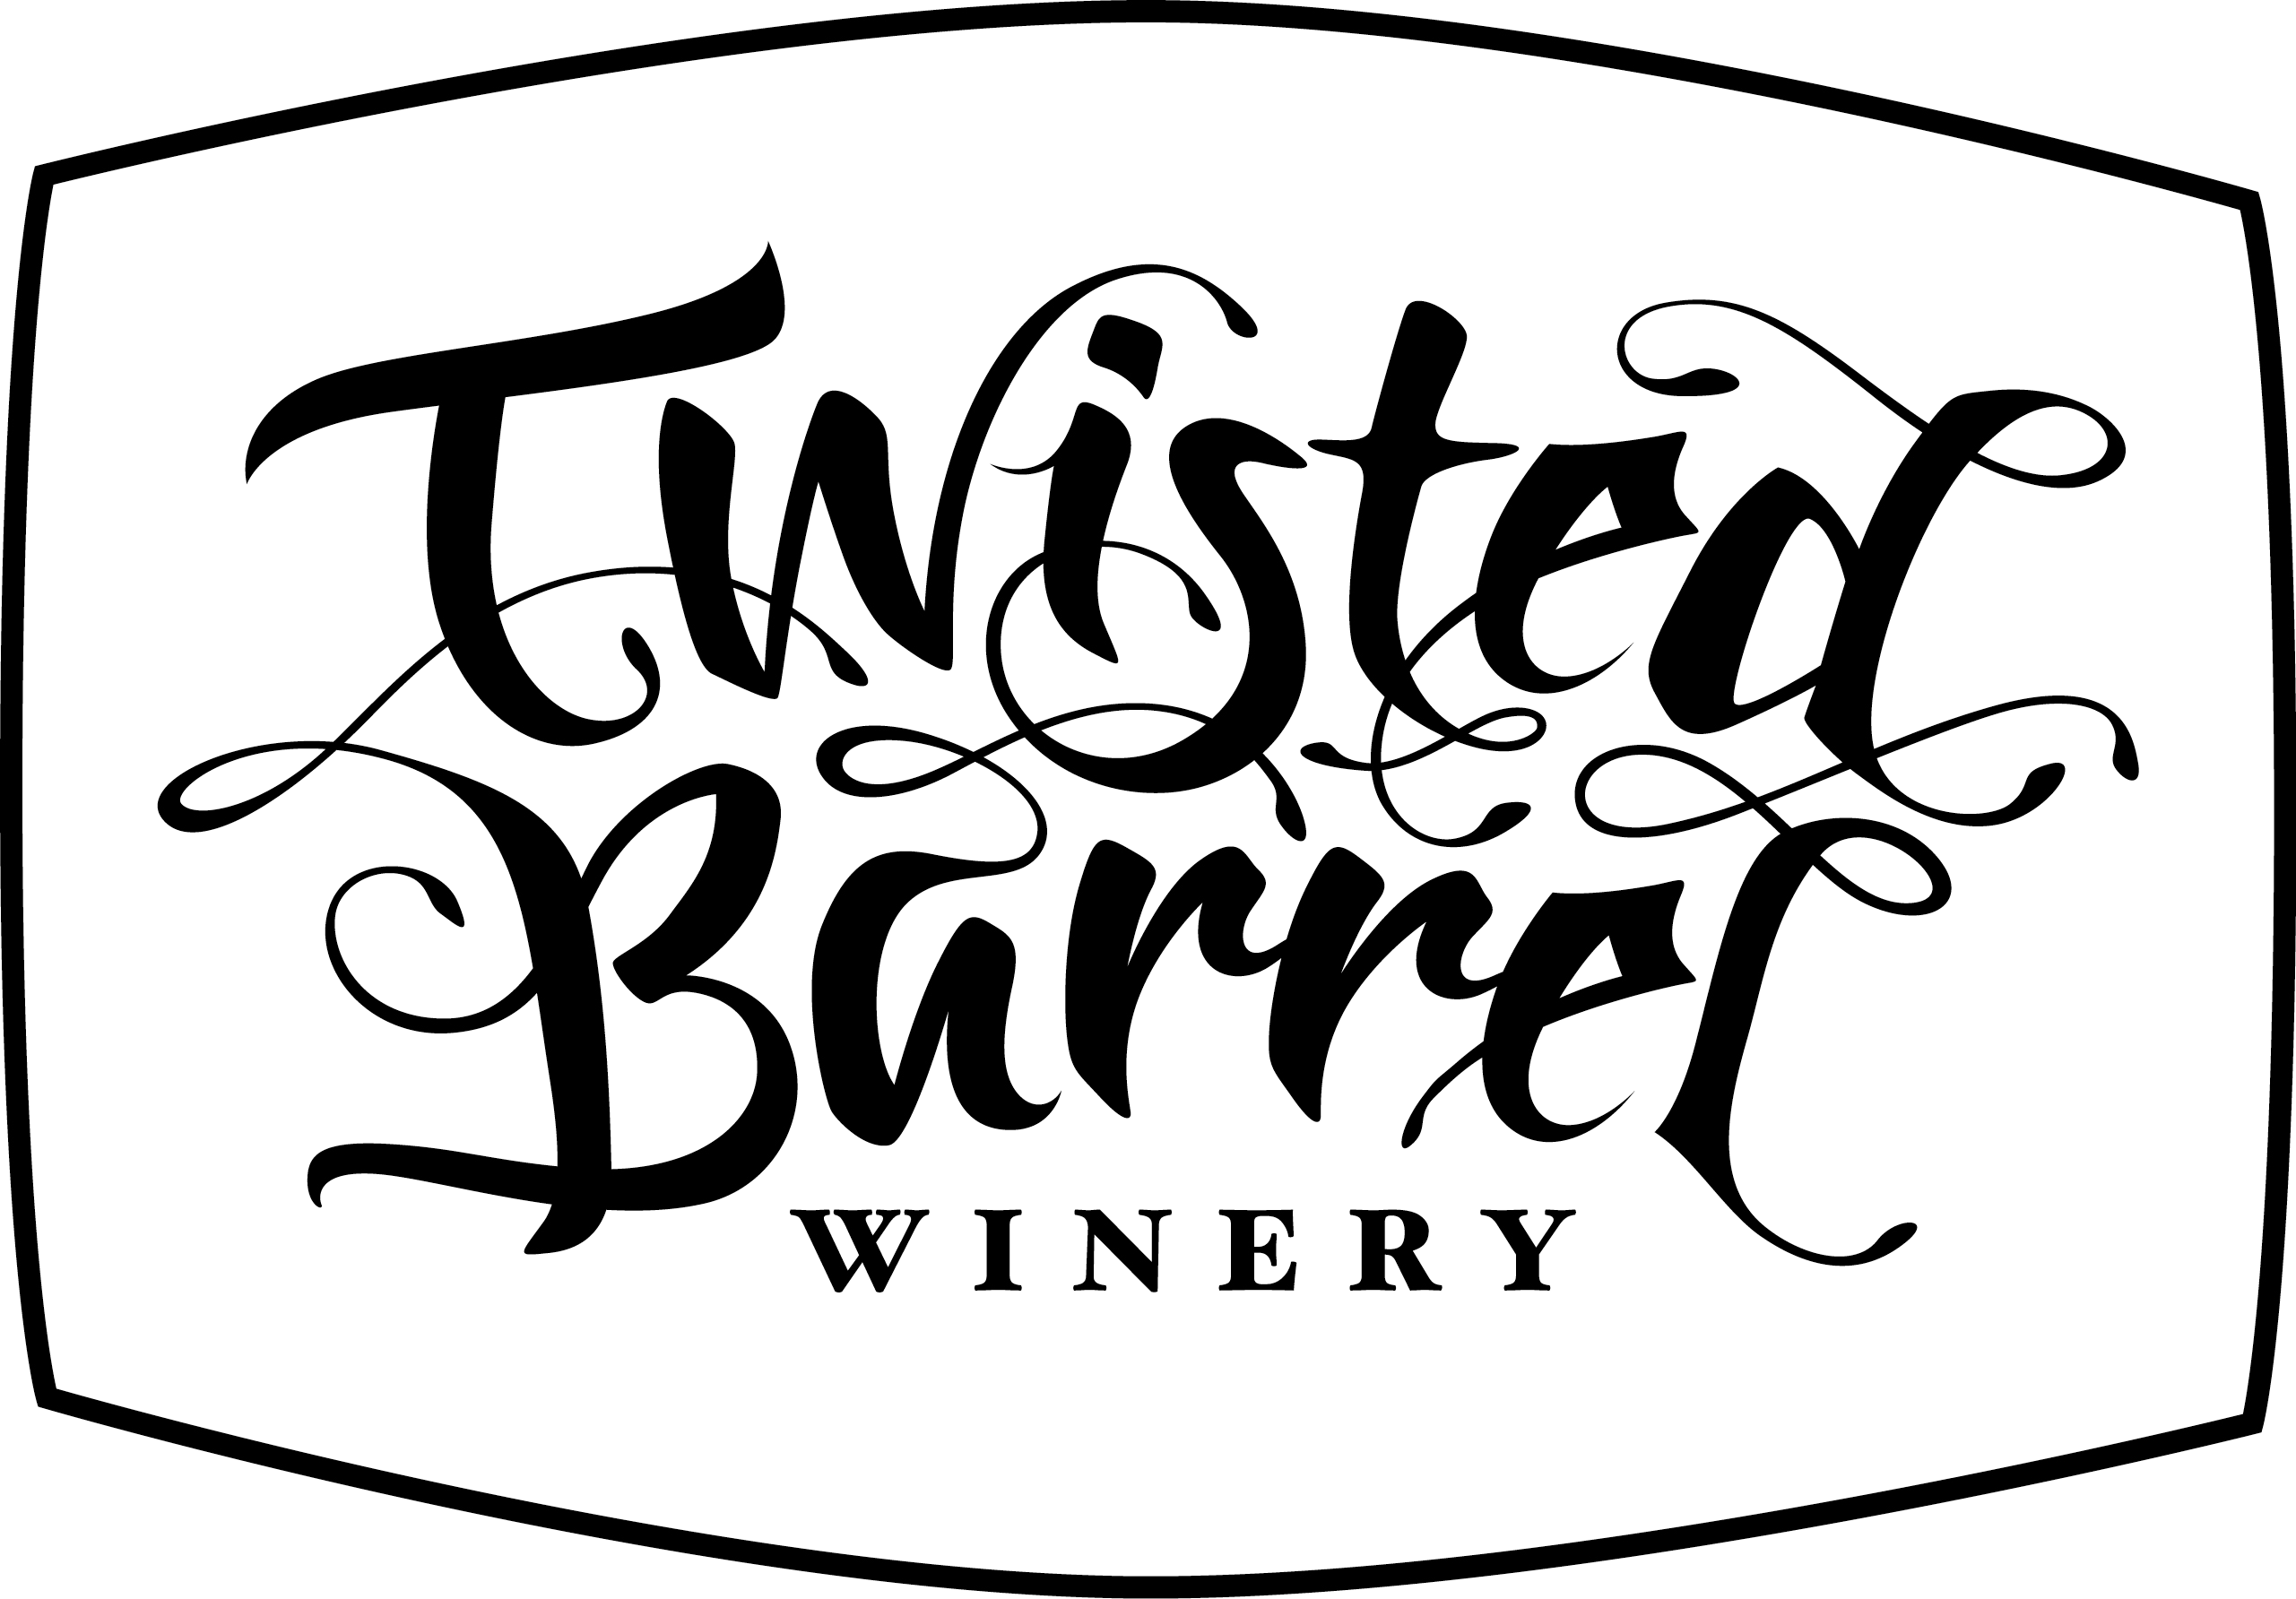 Twisted Barrel Winery